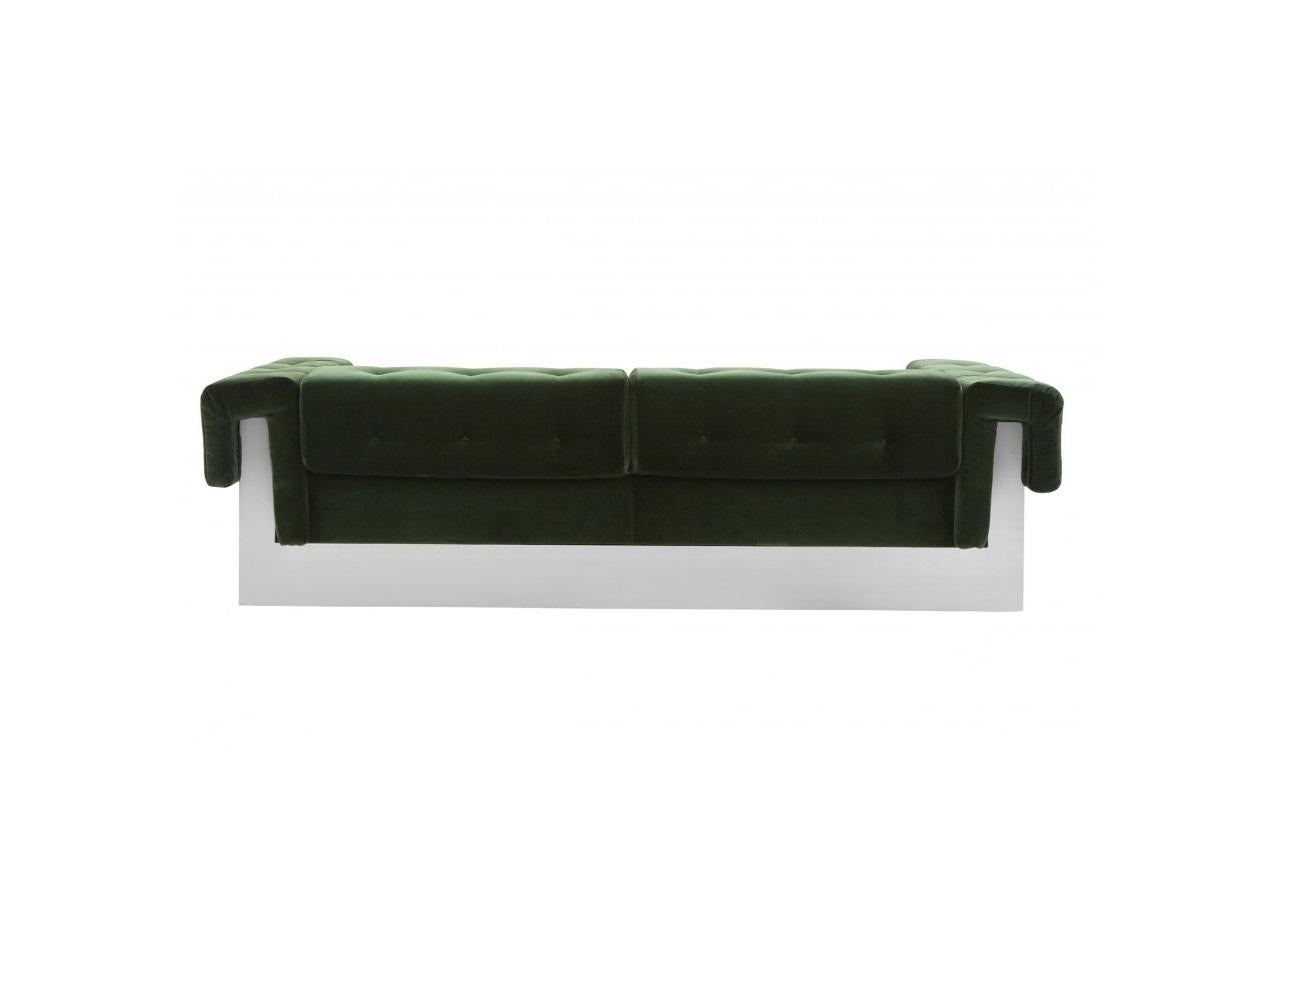 Velvet Milo Baughman Button-Tufted Green & Chrome Wrapped Sofa For Sale